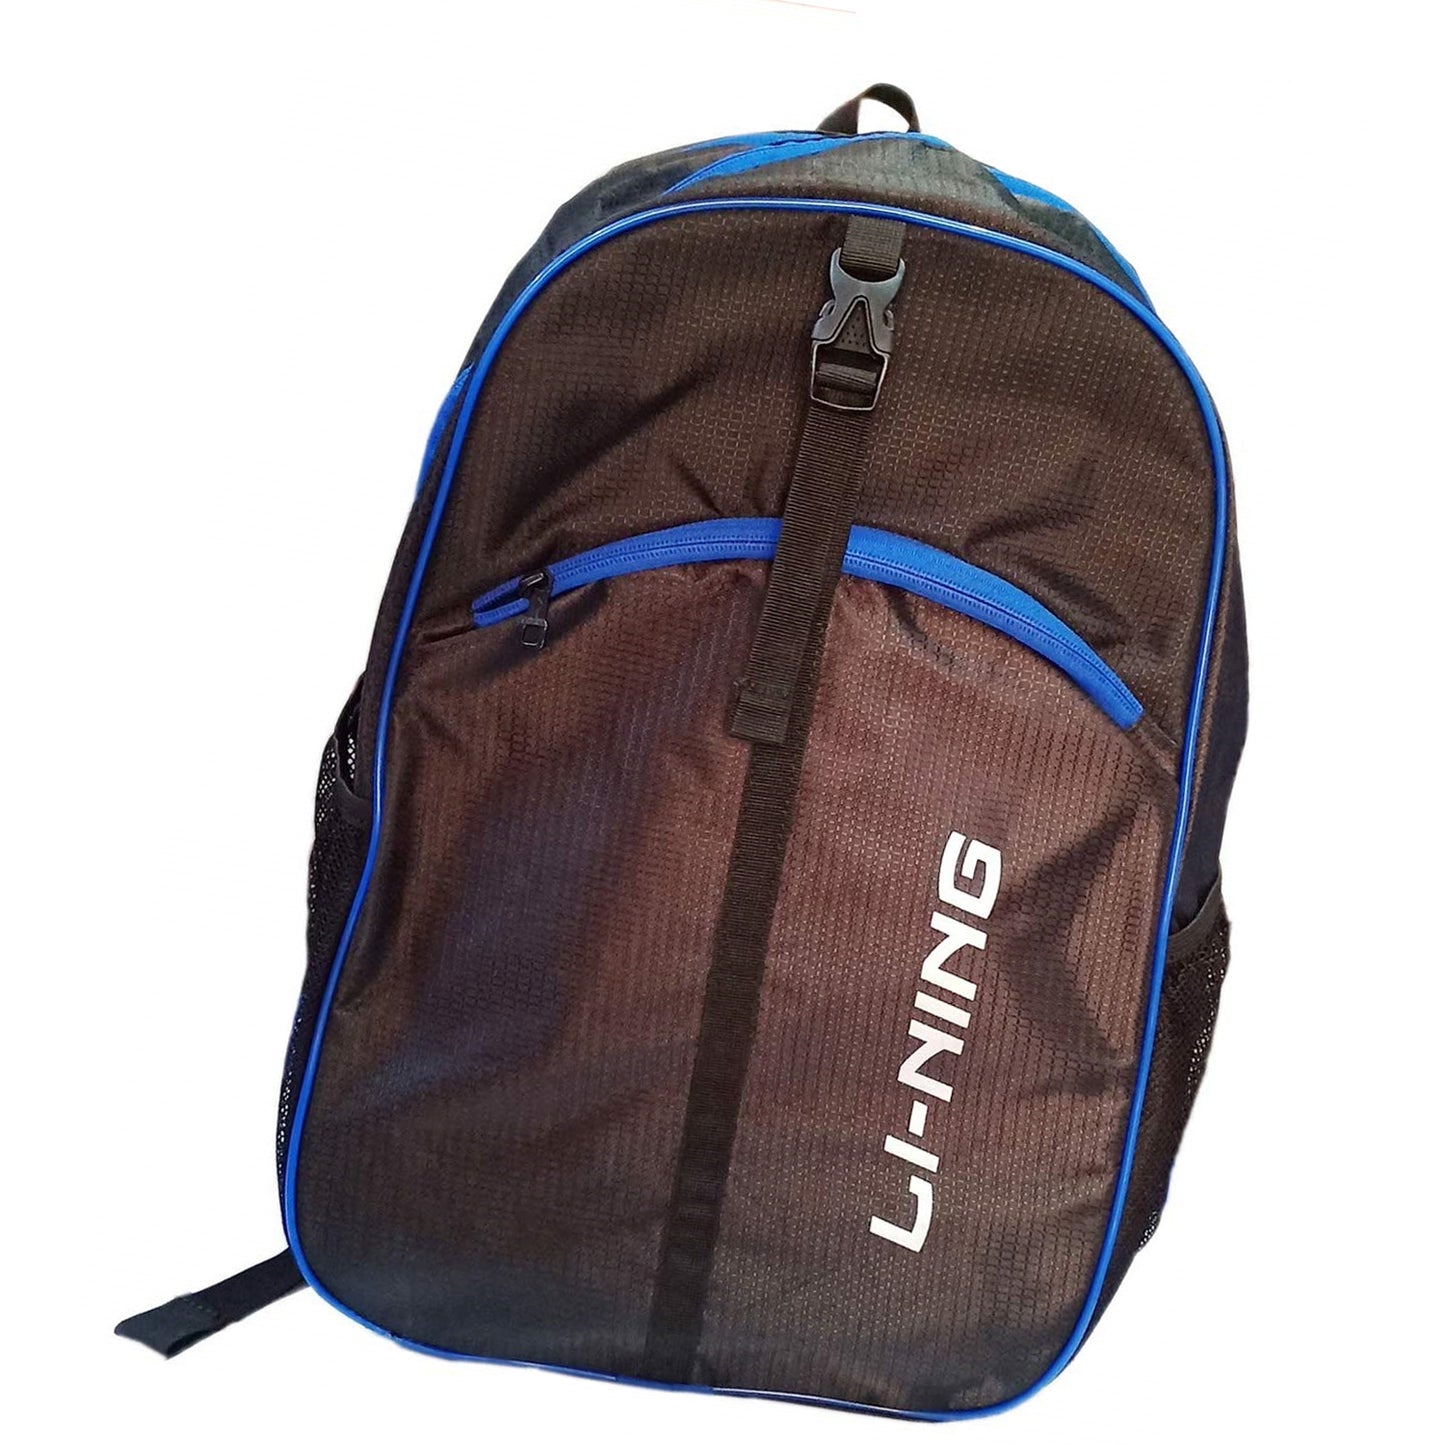 Li-Ning Sports Kitbag - Black Blue - Best Price online Prokicksports.com